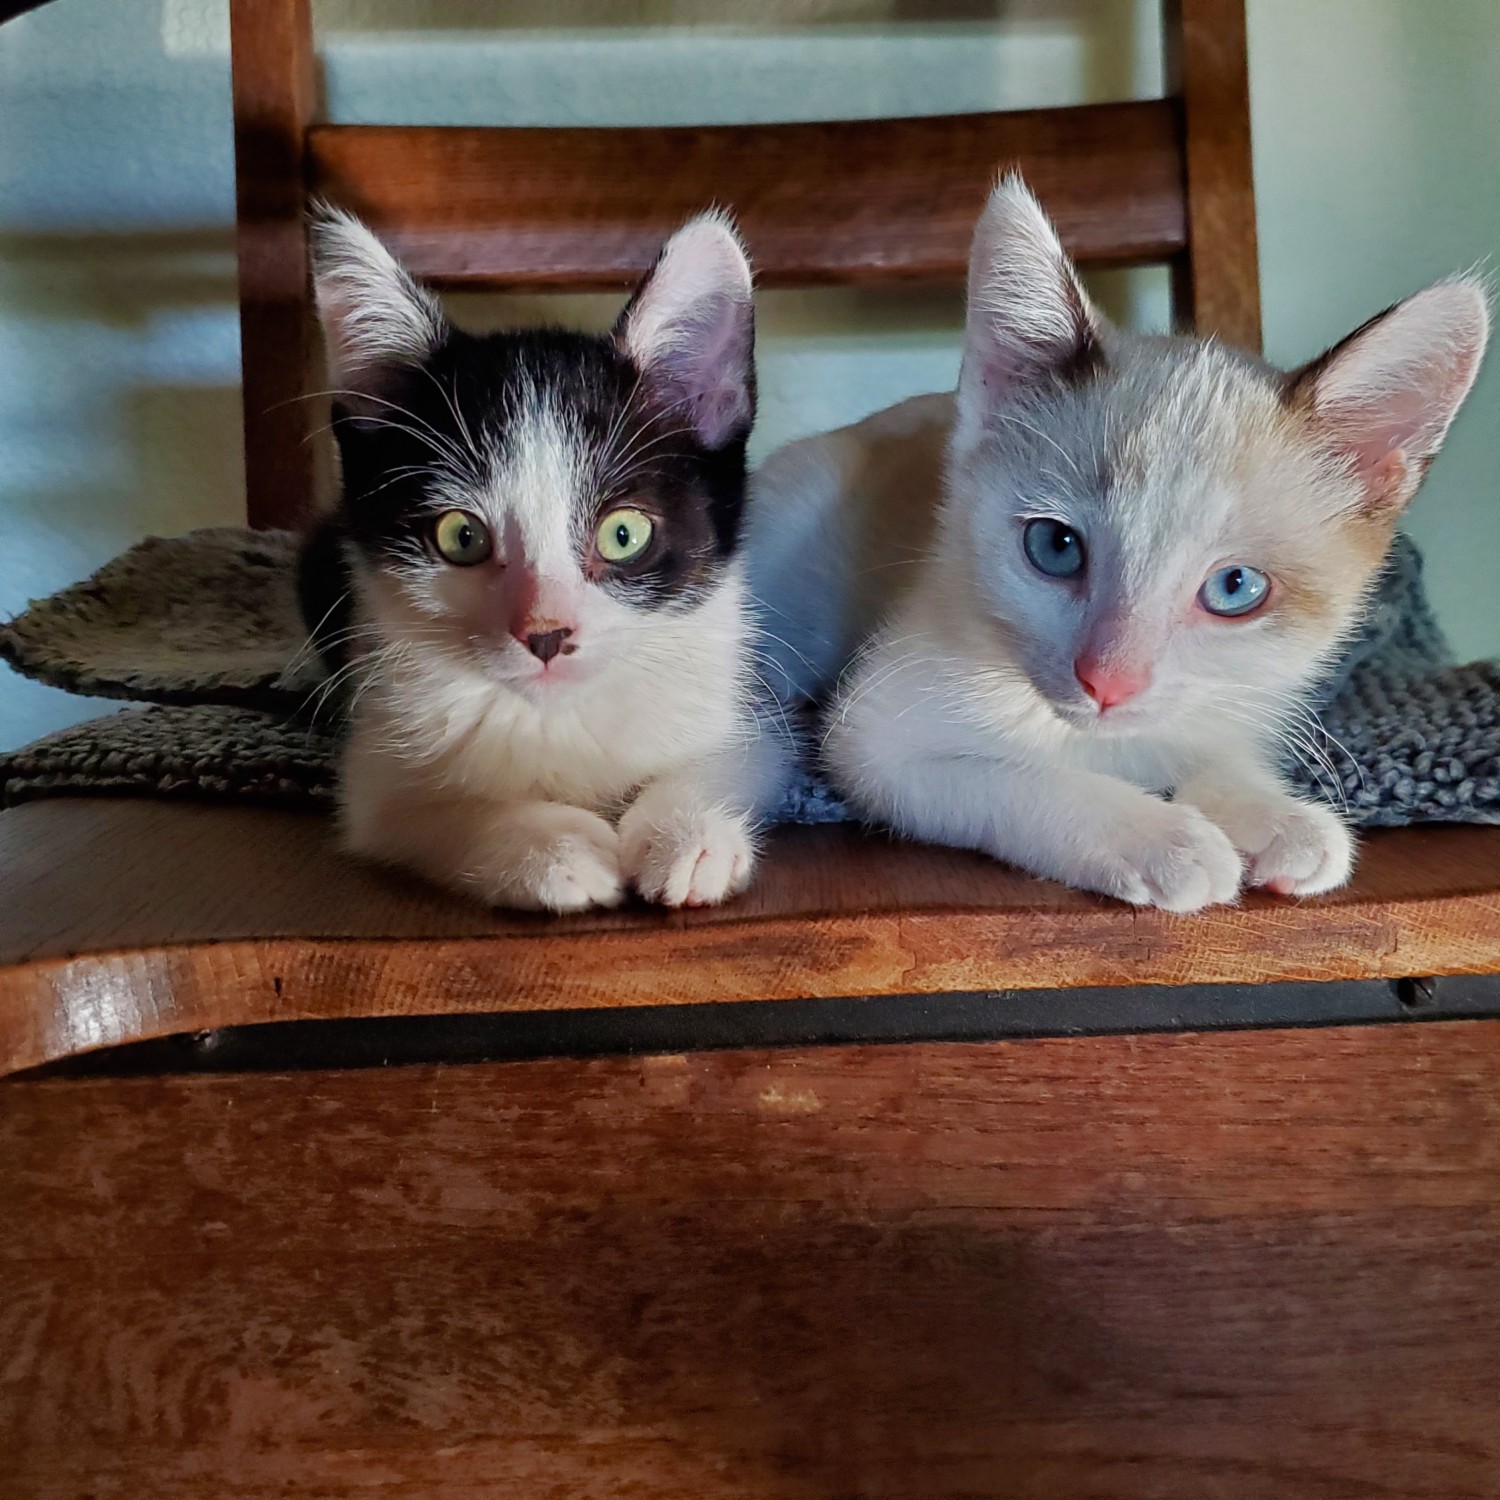 Two kittens lying side by side on a wooden desk